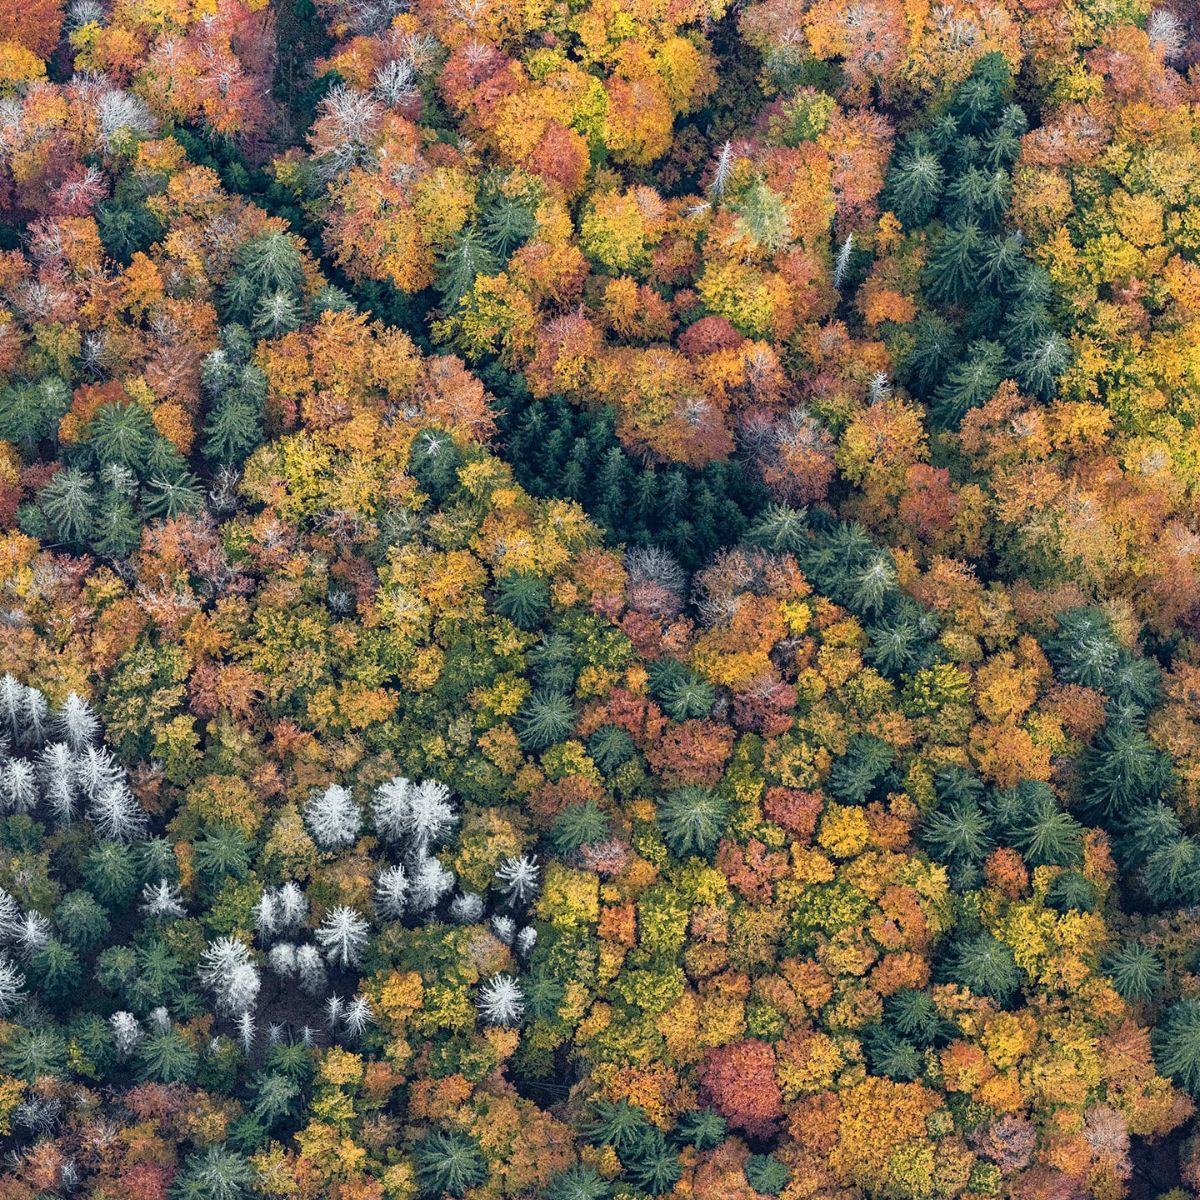 bernard-lang-captures-autumn-trees-invading-a-mountainous-bavarian-forest-featured